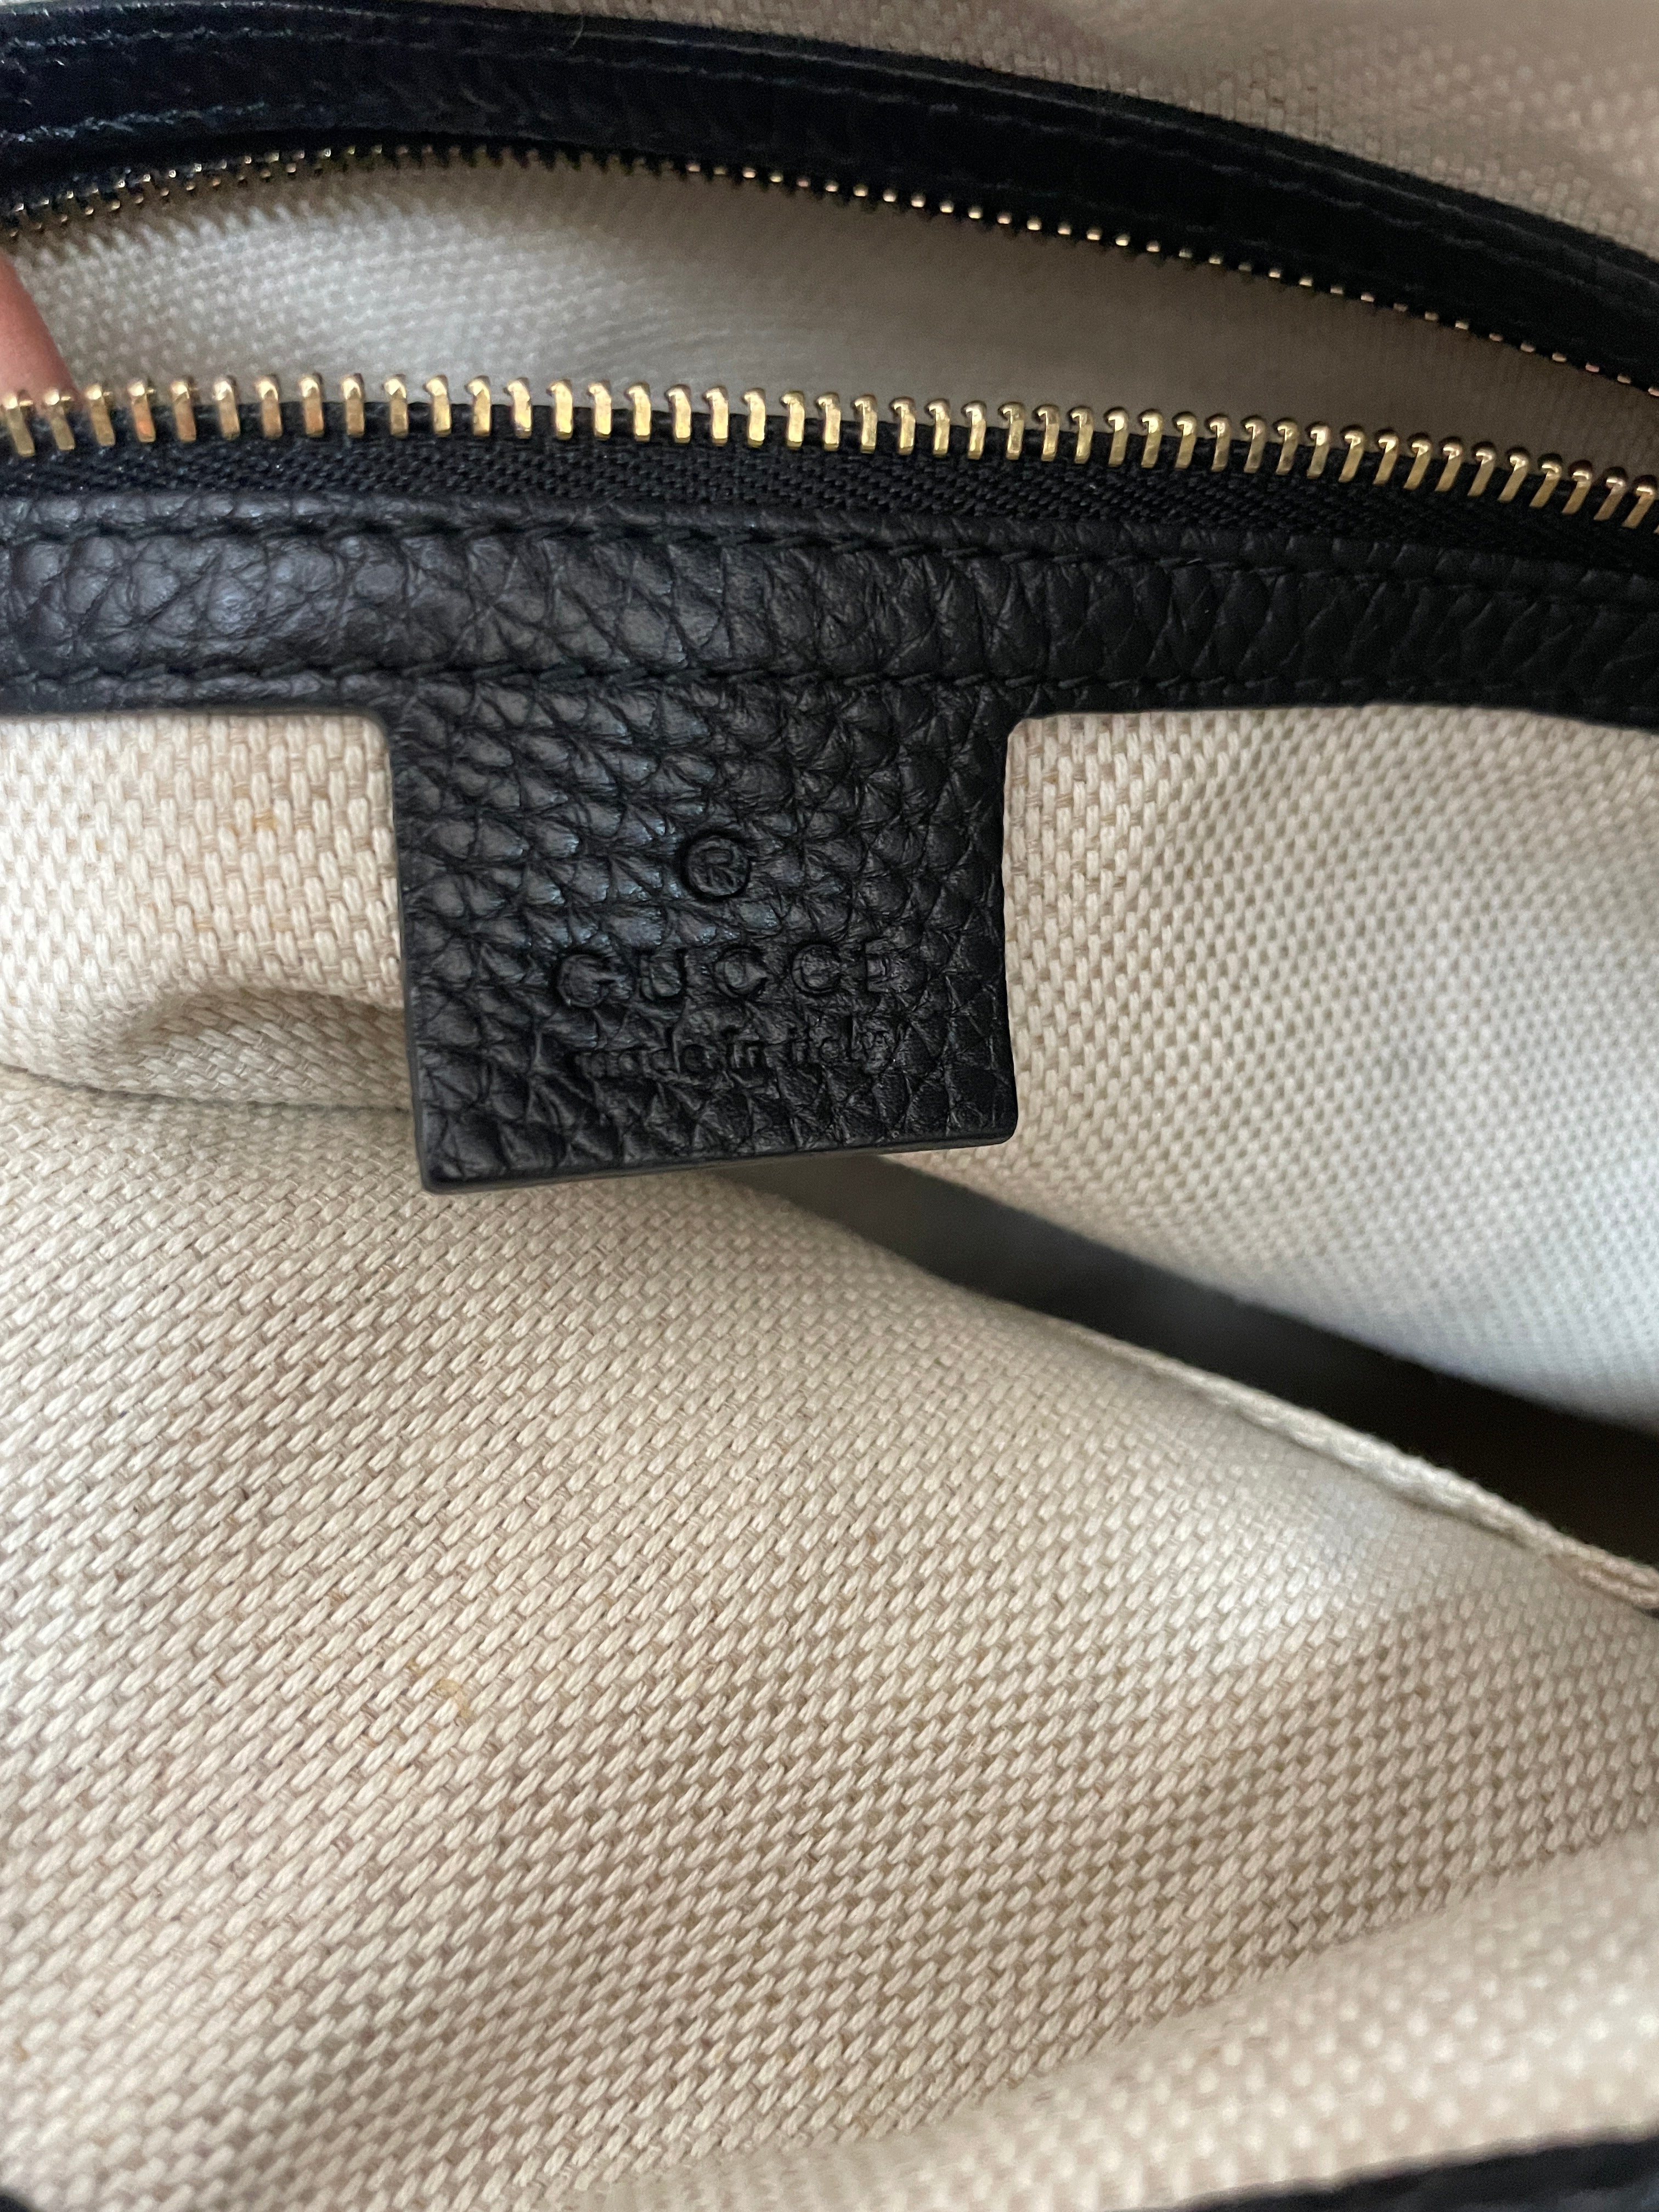 Gucci Soho Two Way Shoulder Bag Black (Missing Strap)Used (7500)